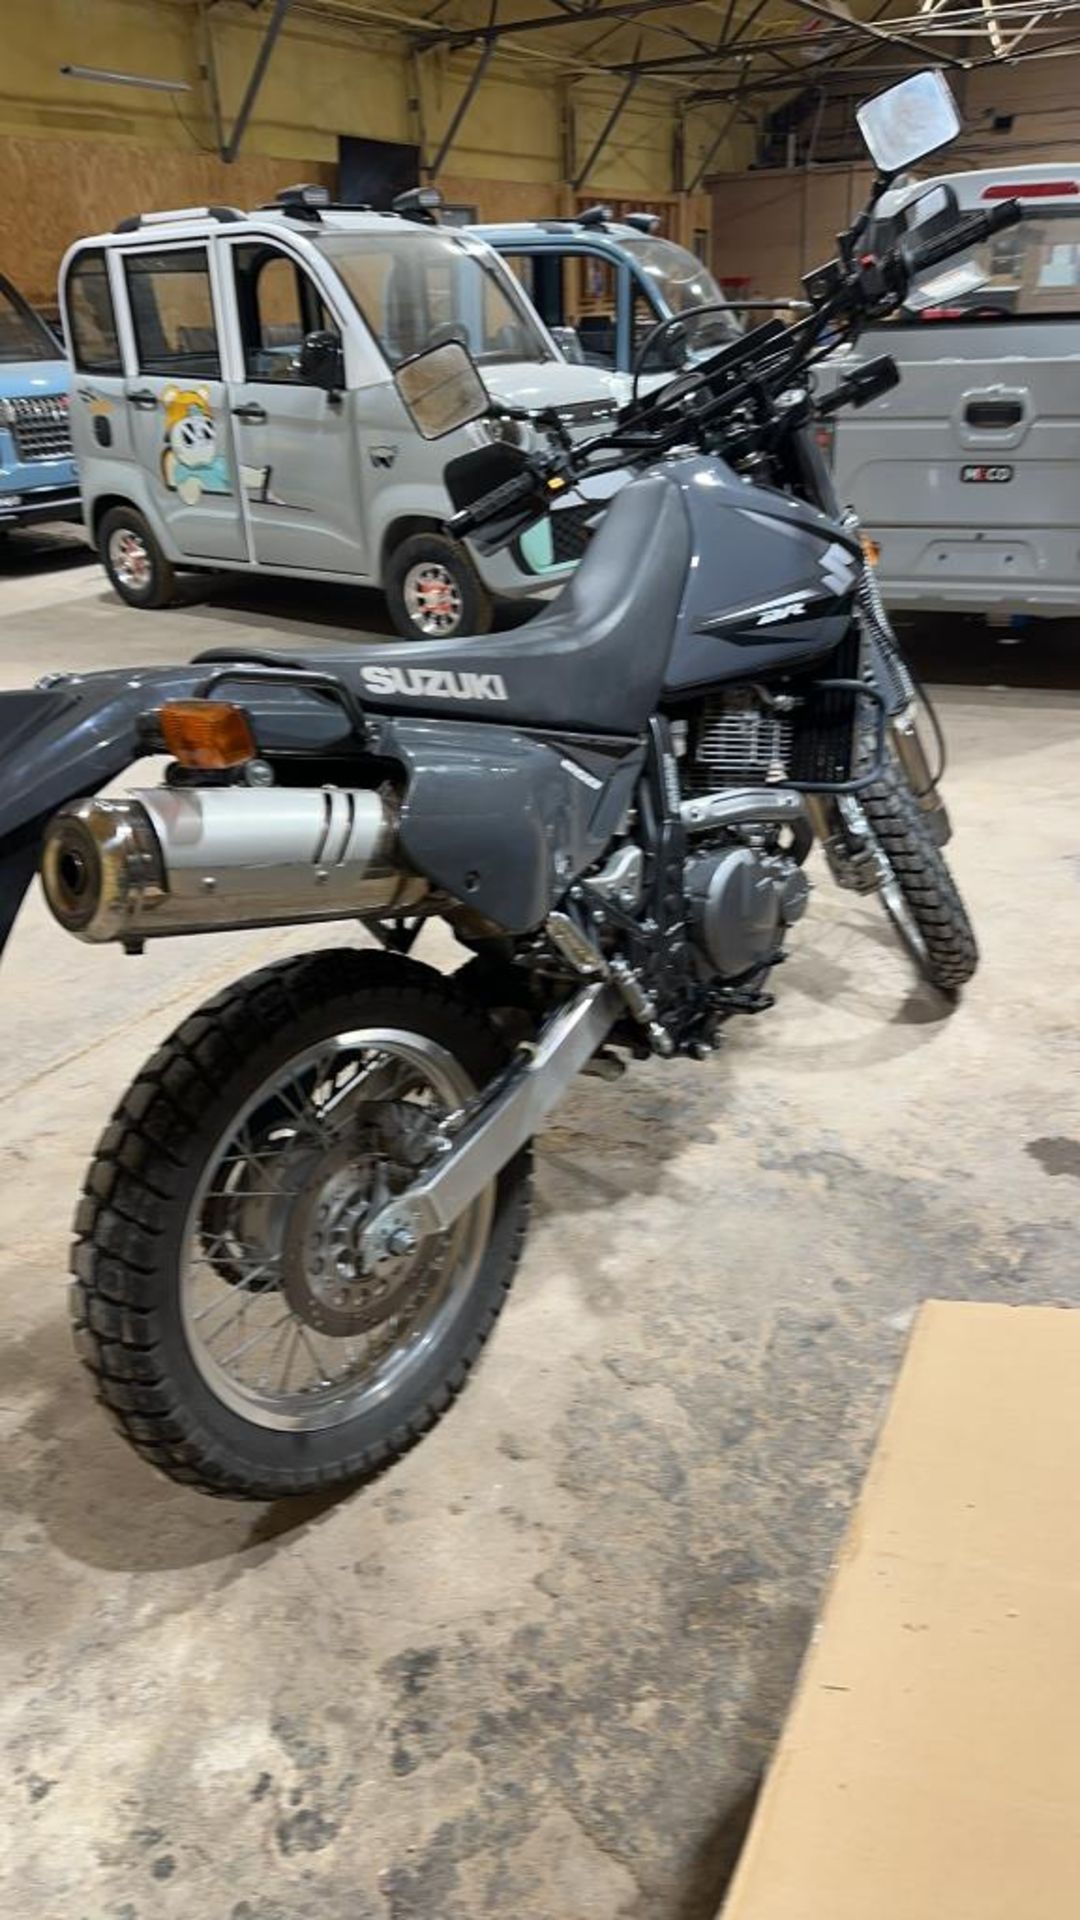 2012 Suzuki DR650S motorcycle - Image 11 of 27